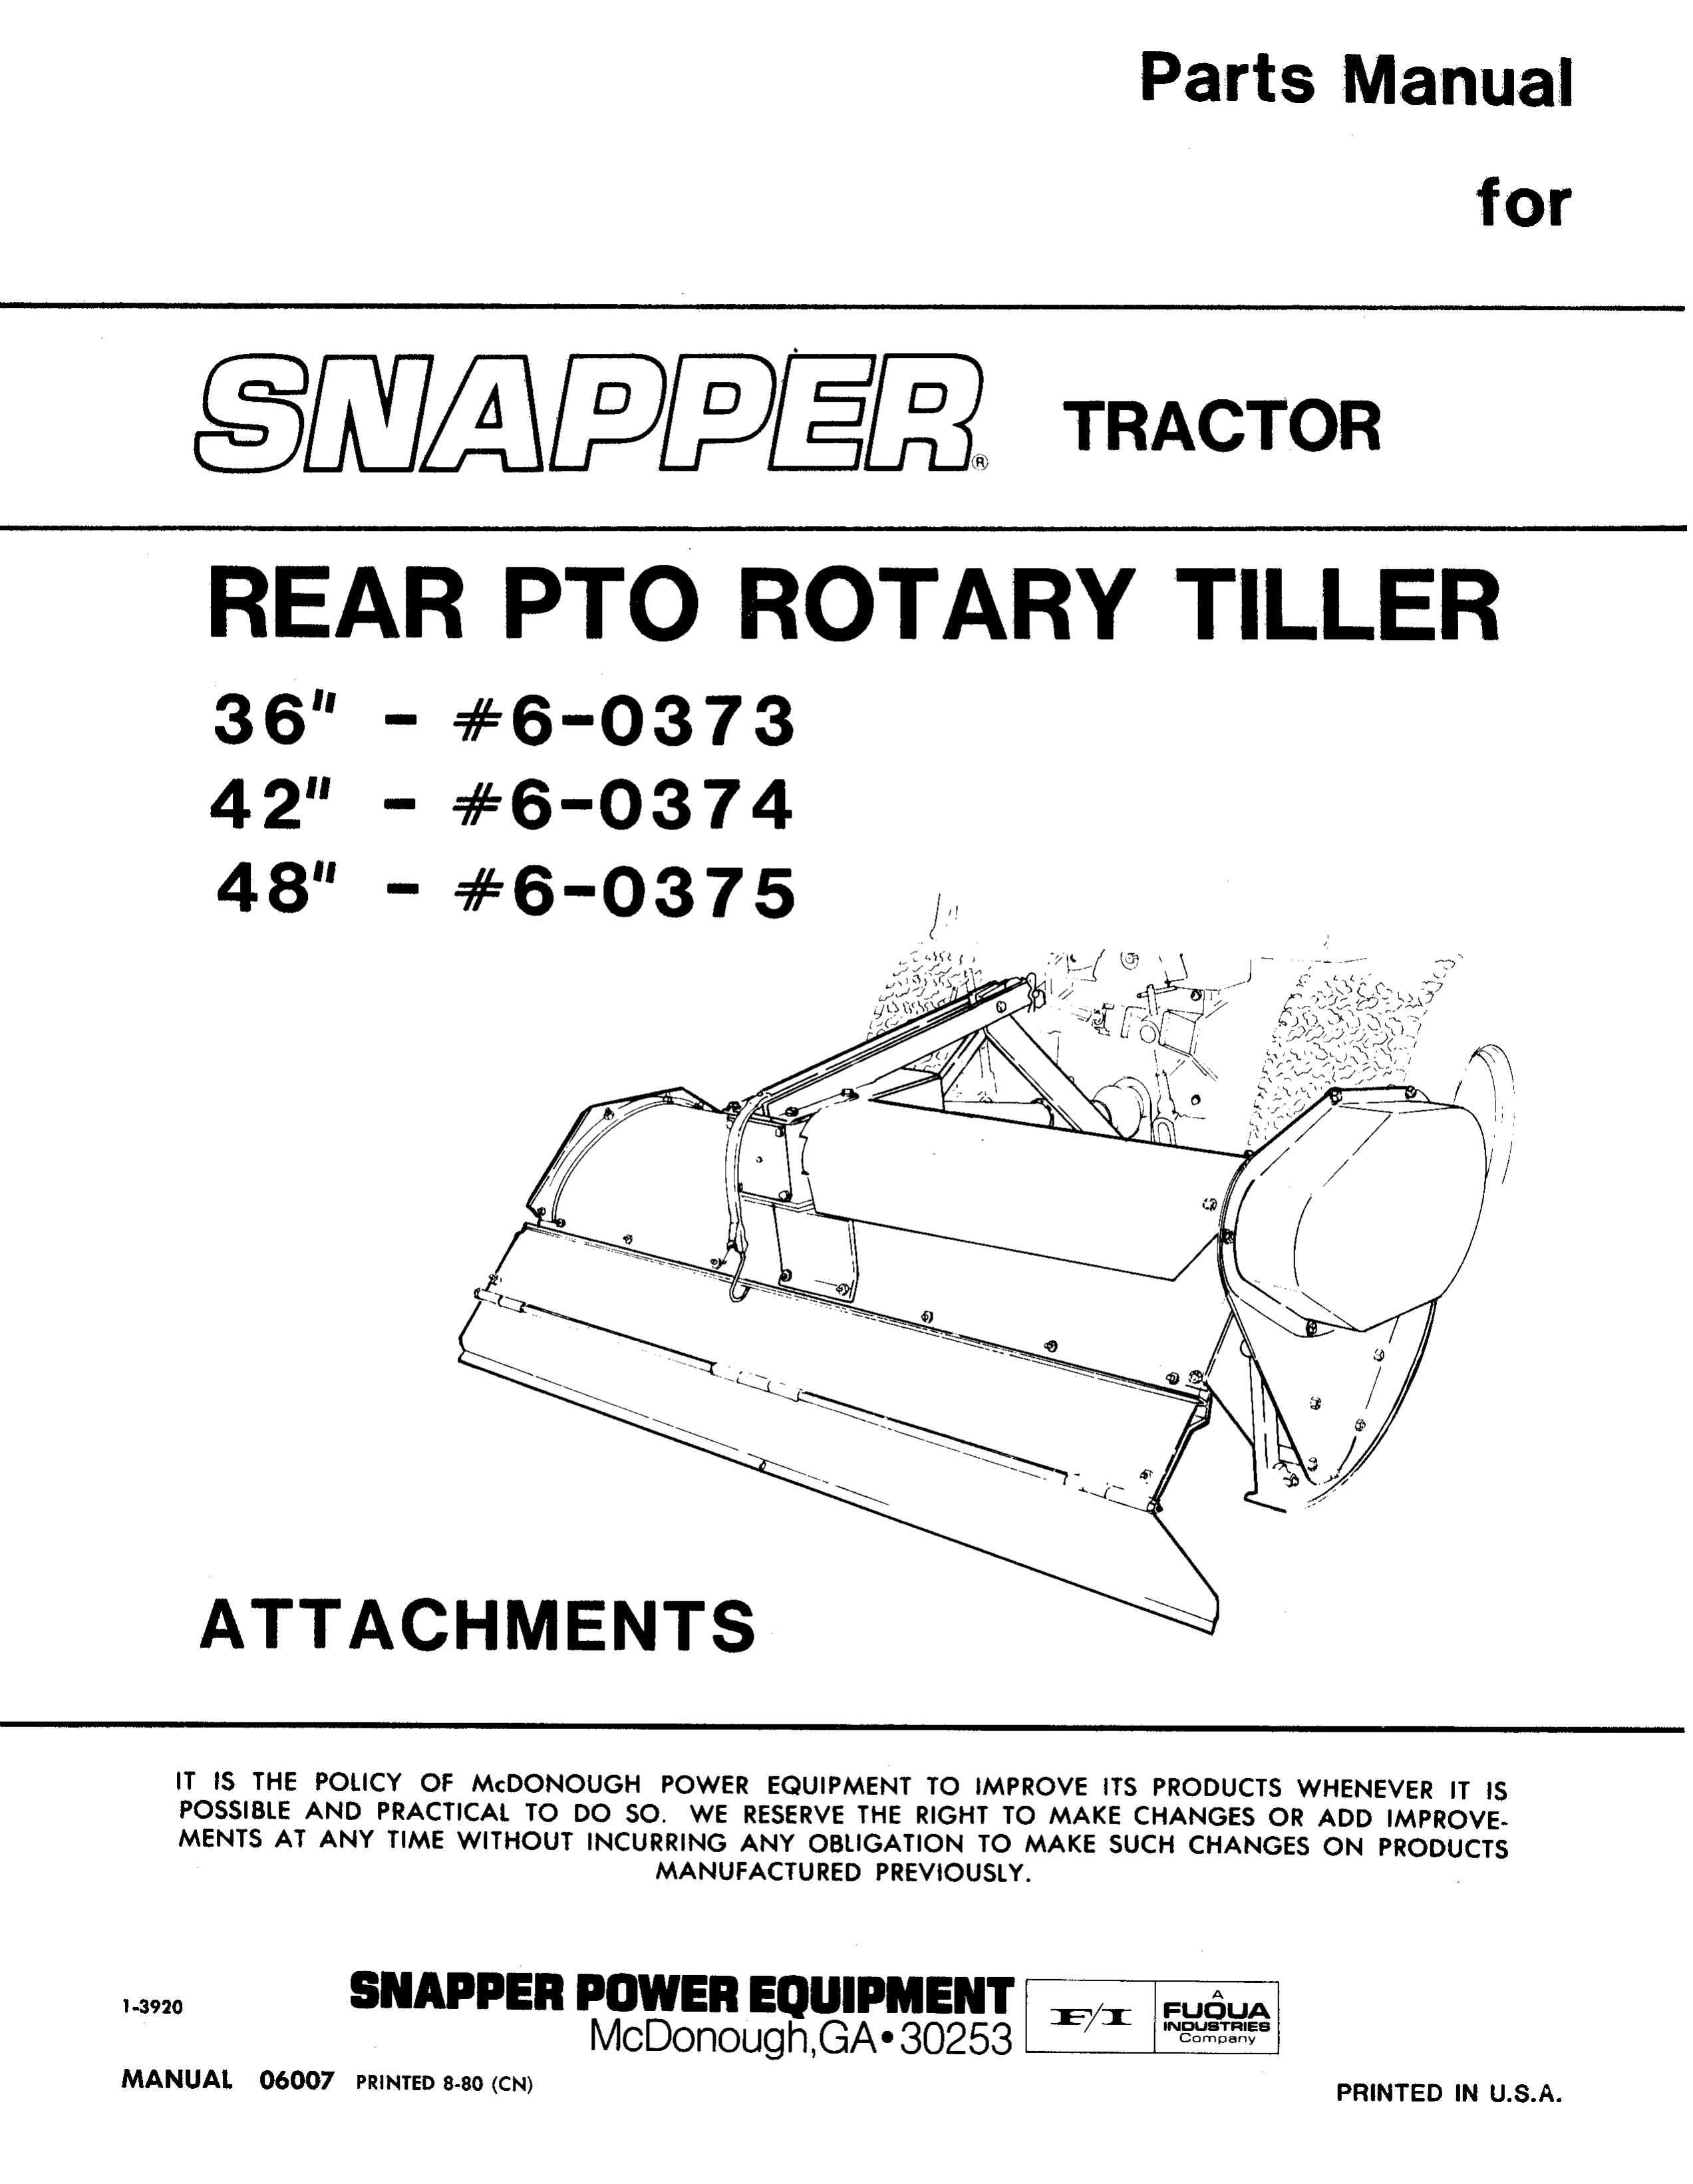 Snapper 6-0374 Tiller User Manual